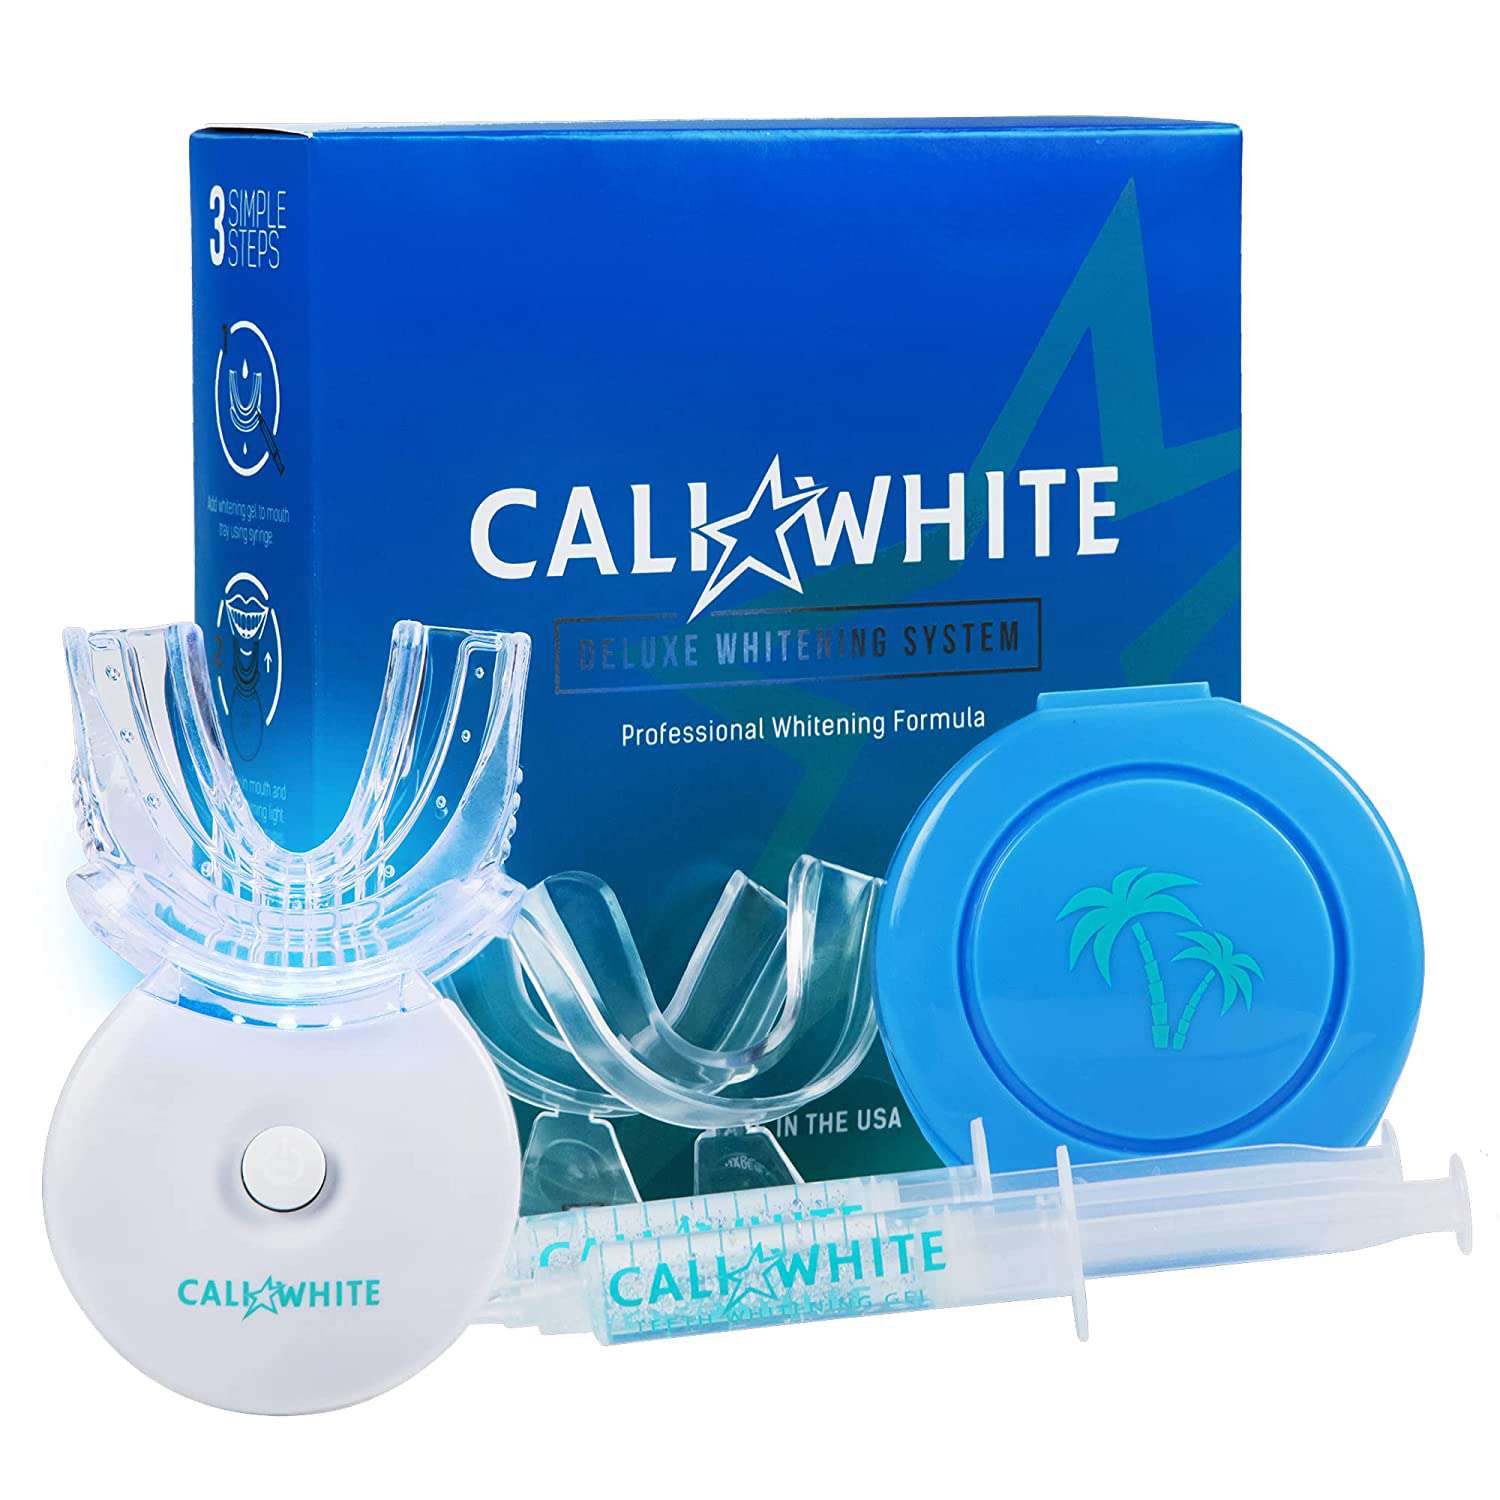 Cali White Teeth Whitening Kit with LED Light,